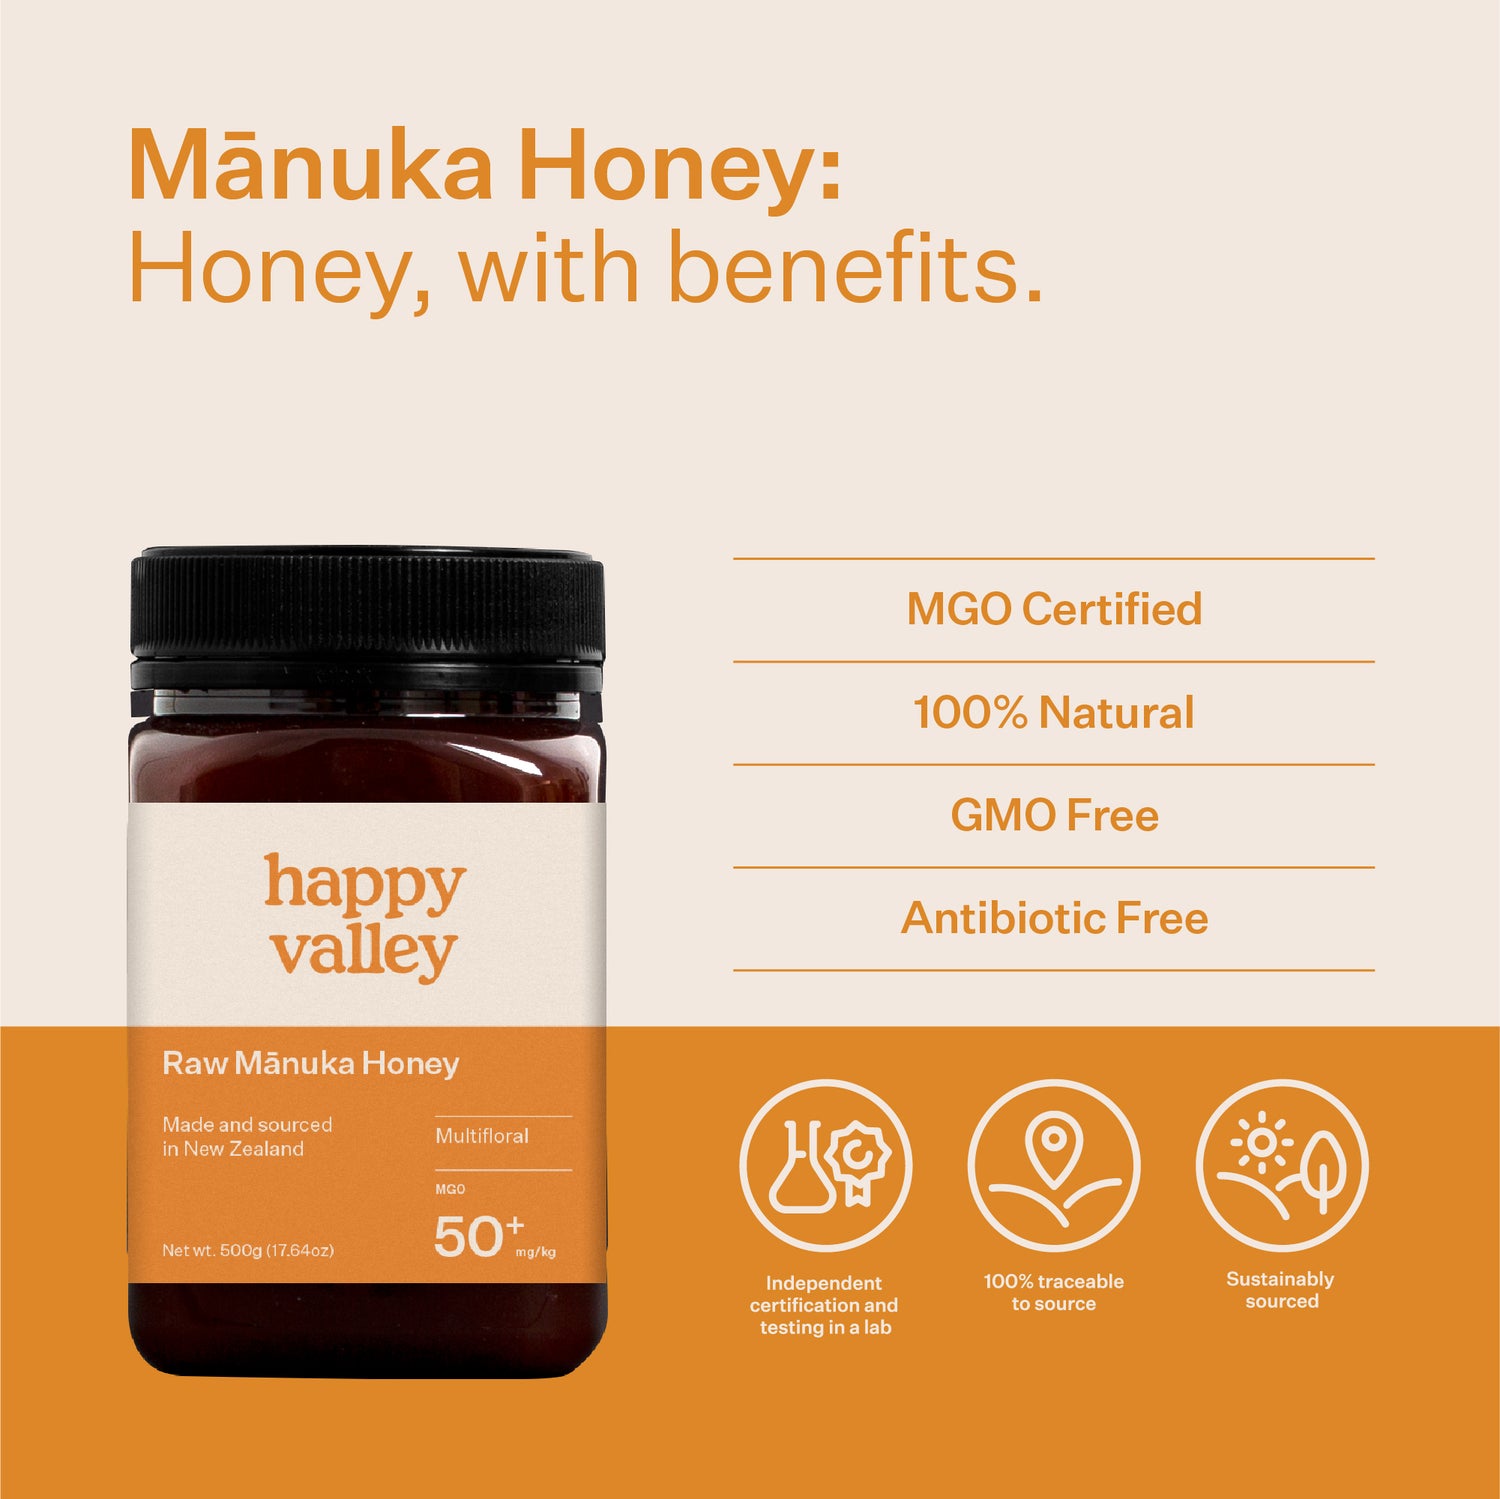 MGO 50+ Multifloral Manuka Honey